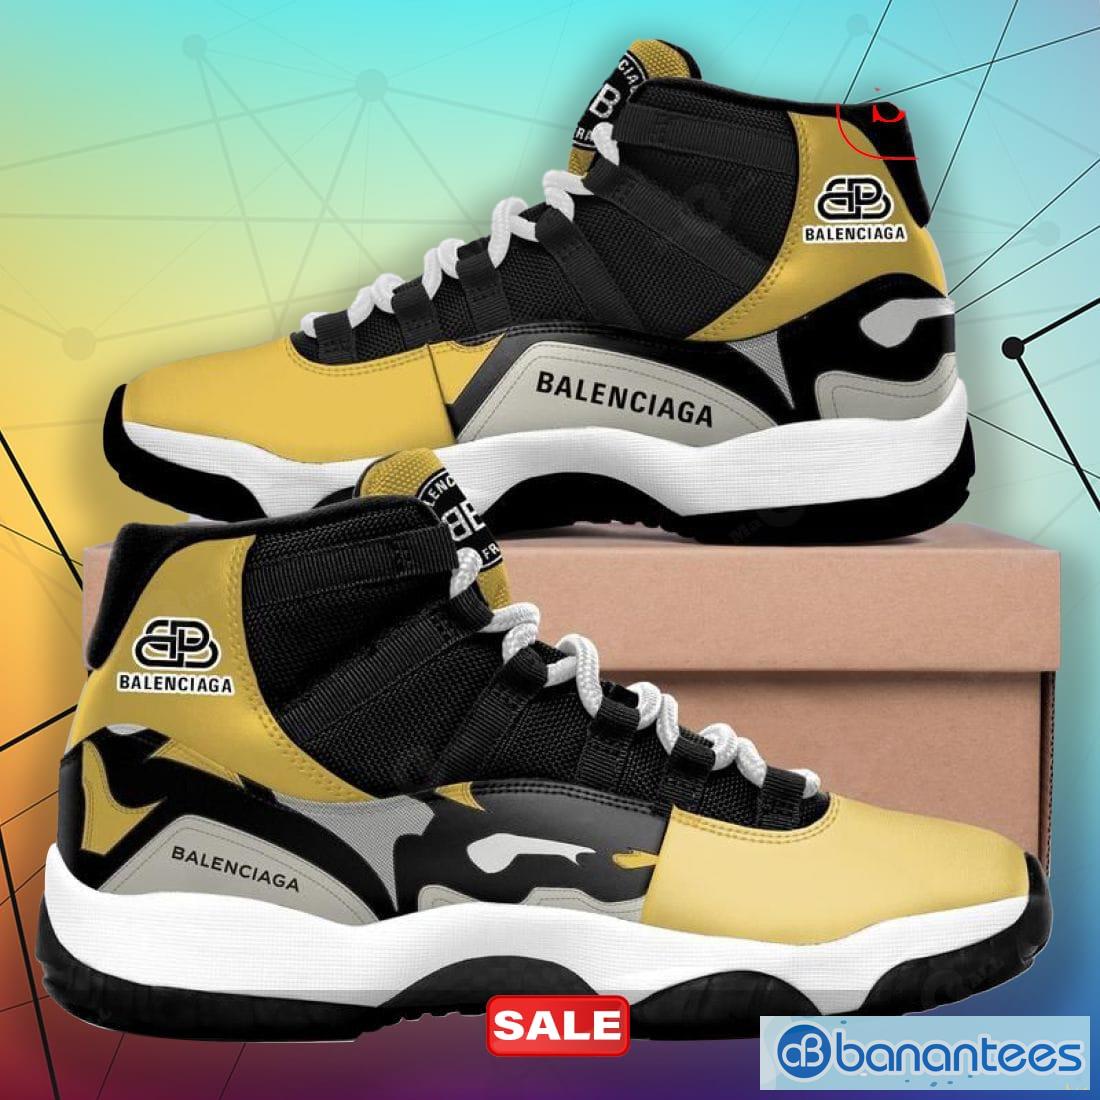 Sobriquette Selskab legeplads Balenciaga Black Gold Air Jordan 11 Sneakers Gifts For Men Women Shoes  Design - Banantees